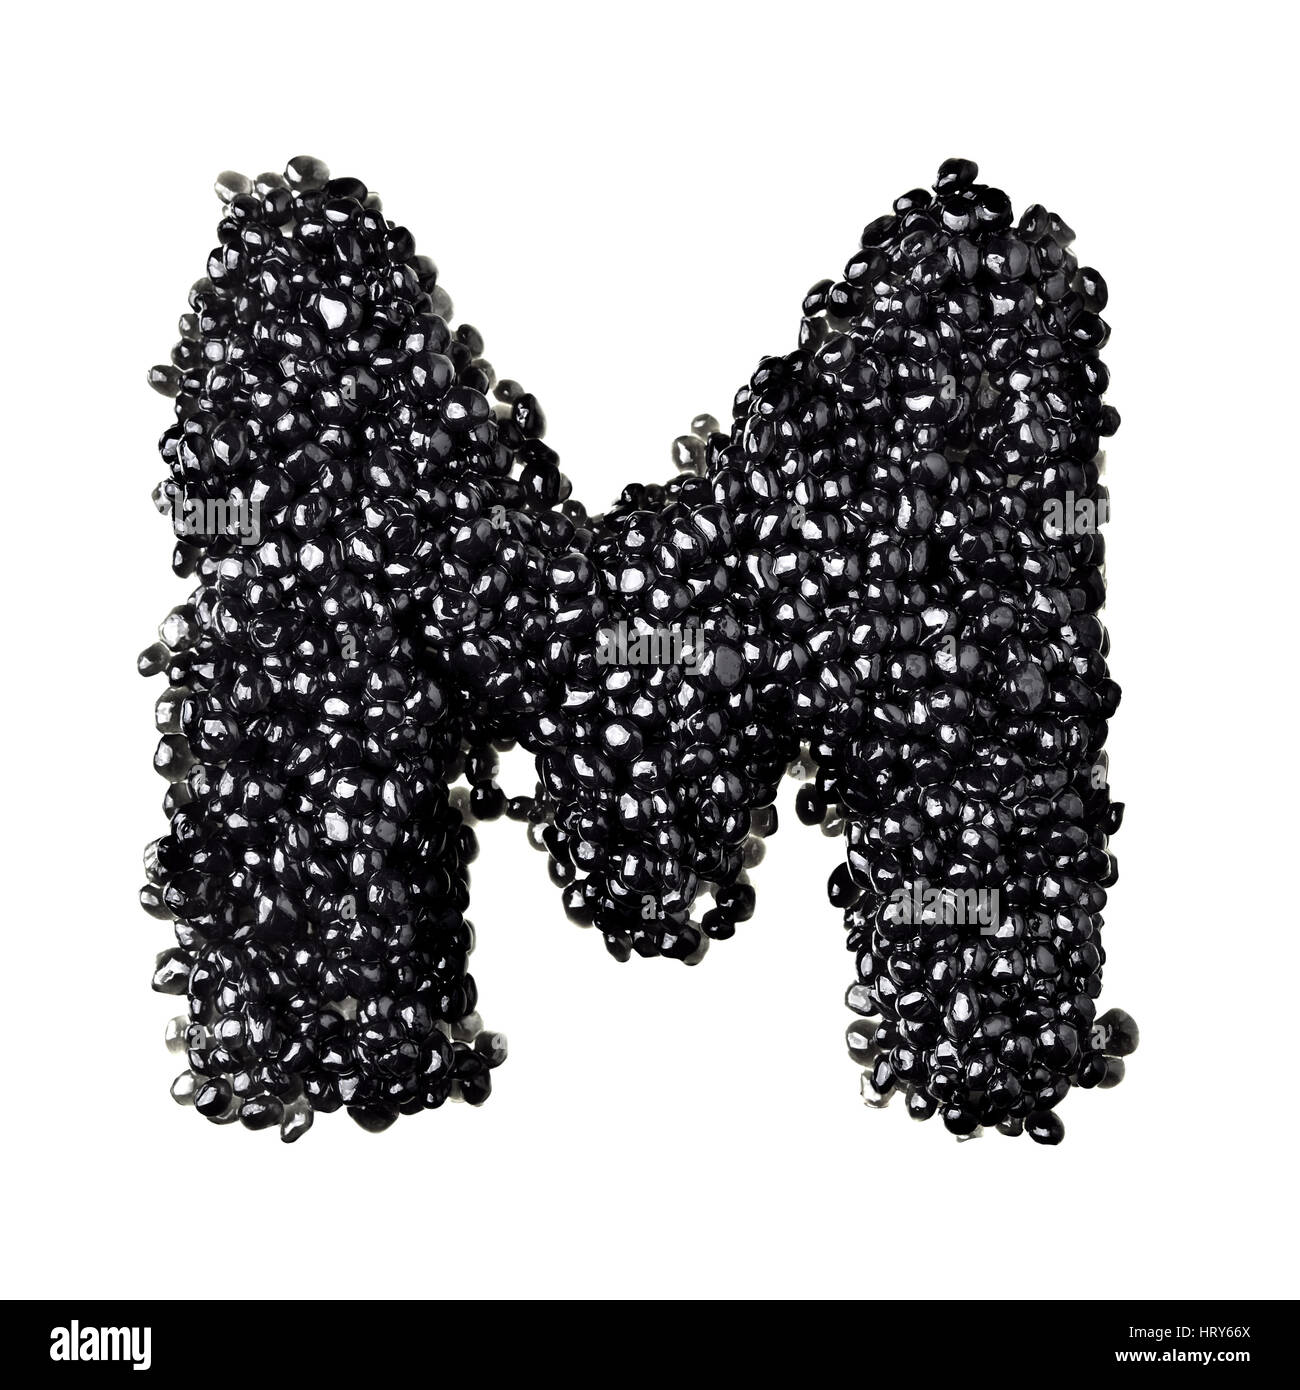 M - Alphabet made from black caviar Stock Photo